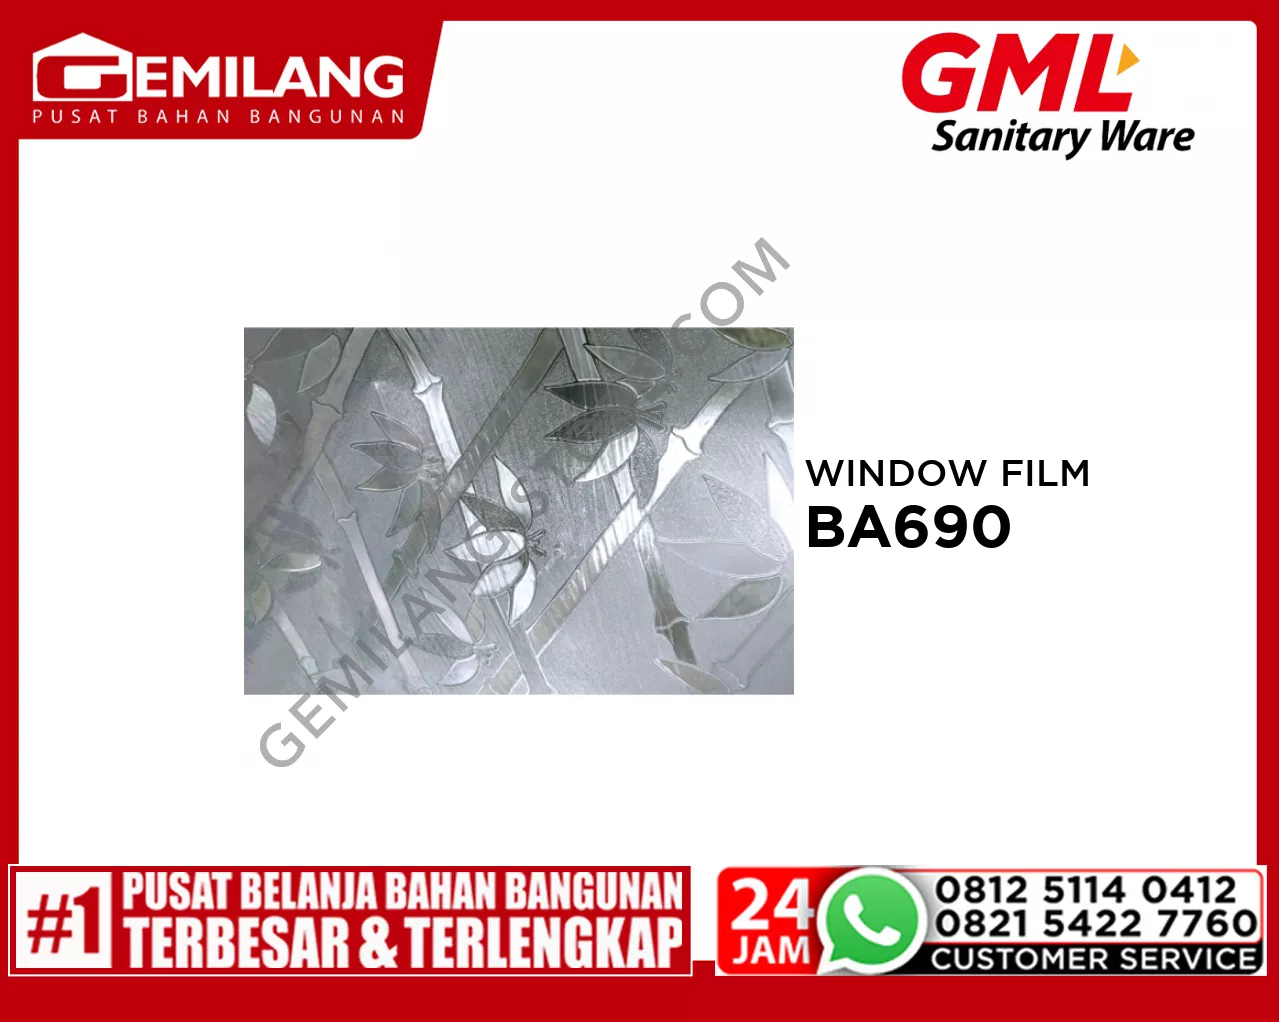 GML 2D STATIC WINDOW FILM BA690 50 x 90cm x 0.18mm